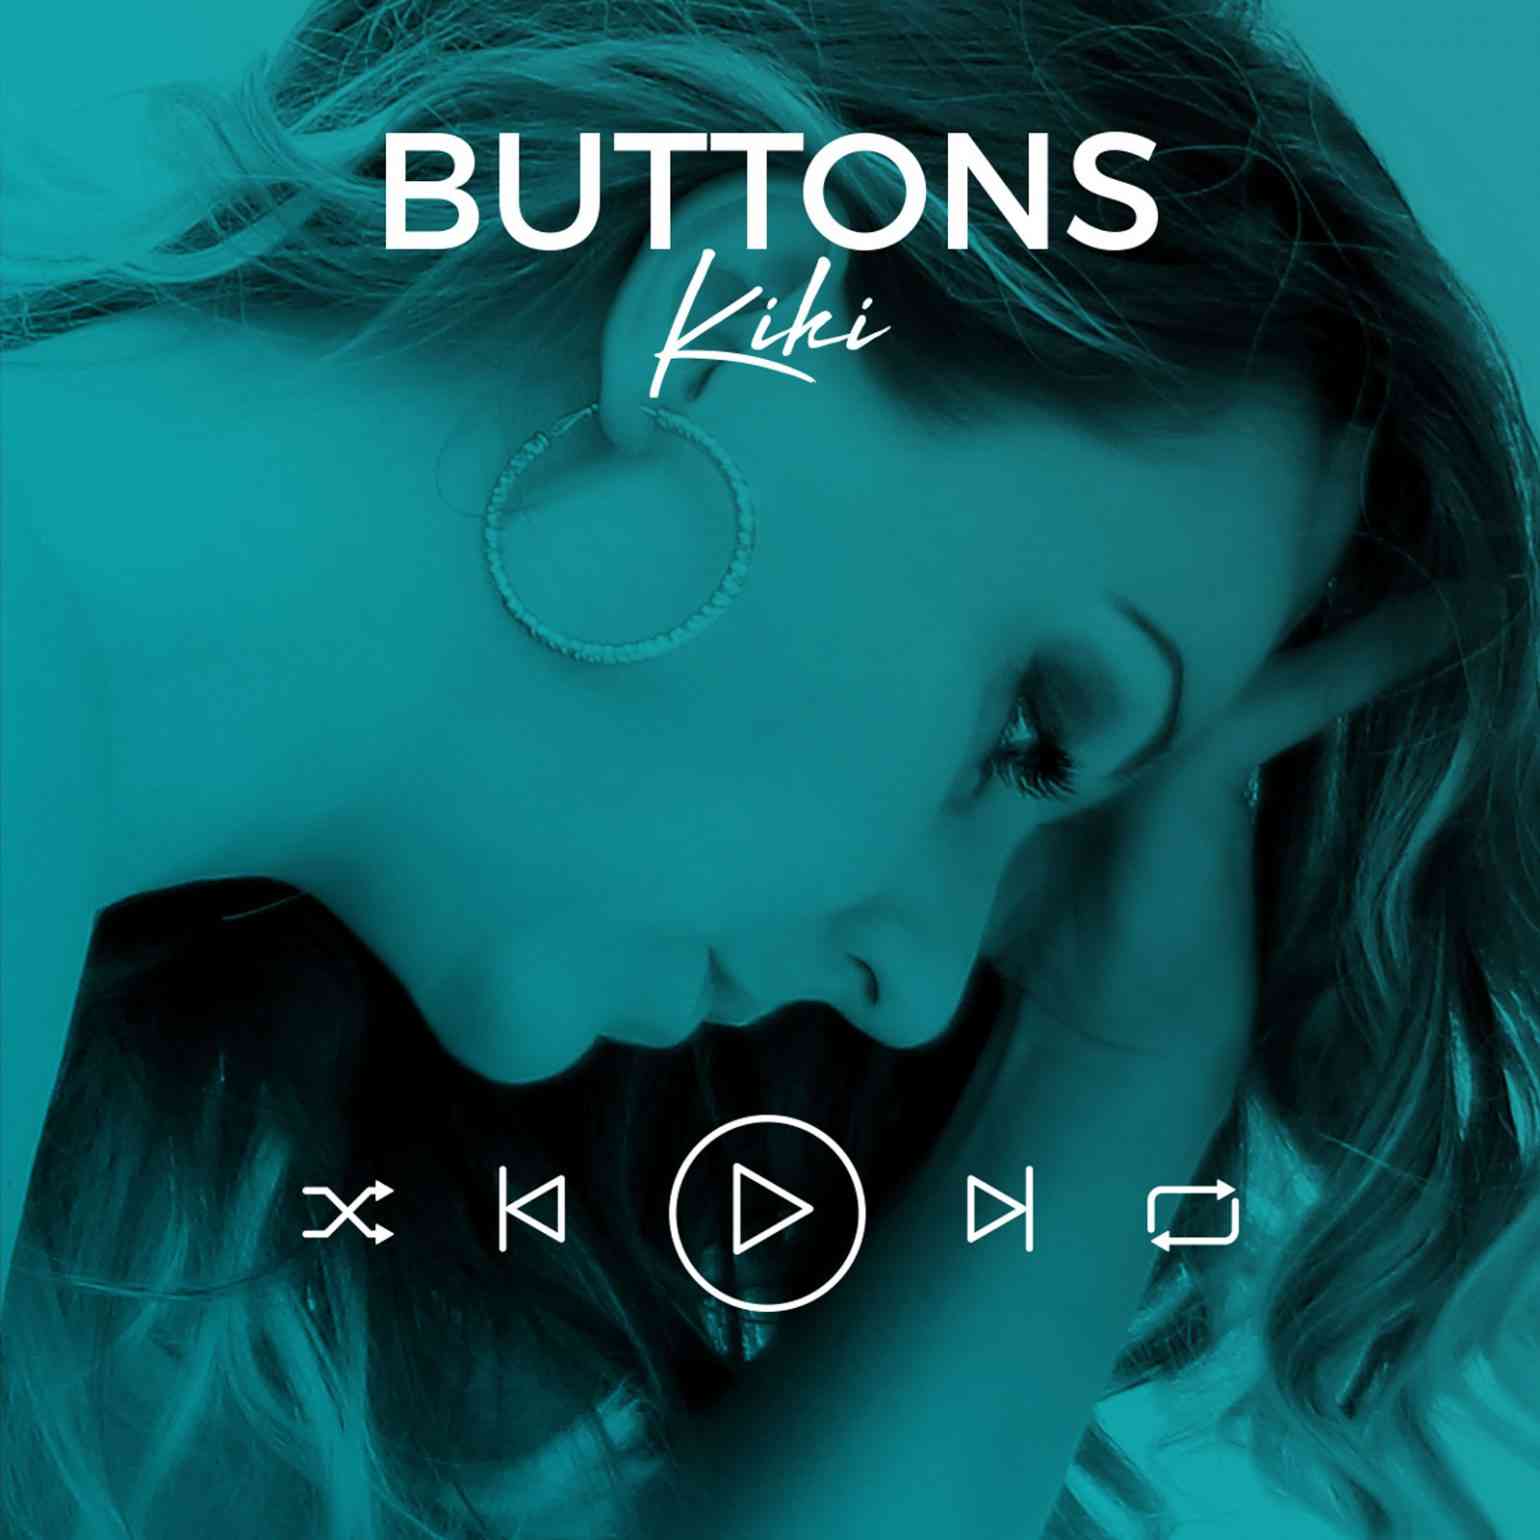 Kiki – “Buttons”